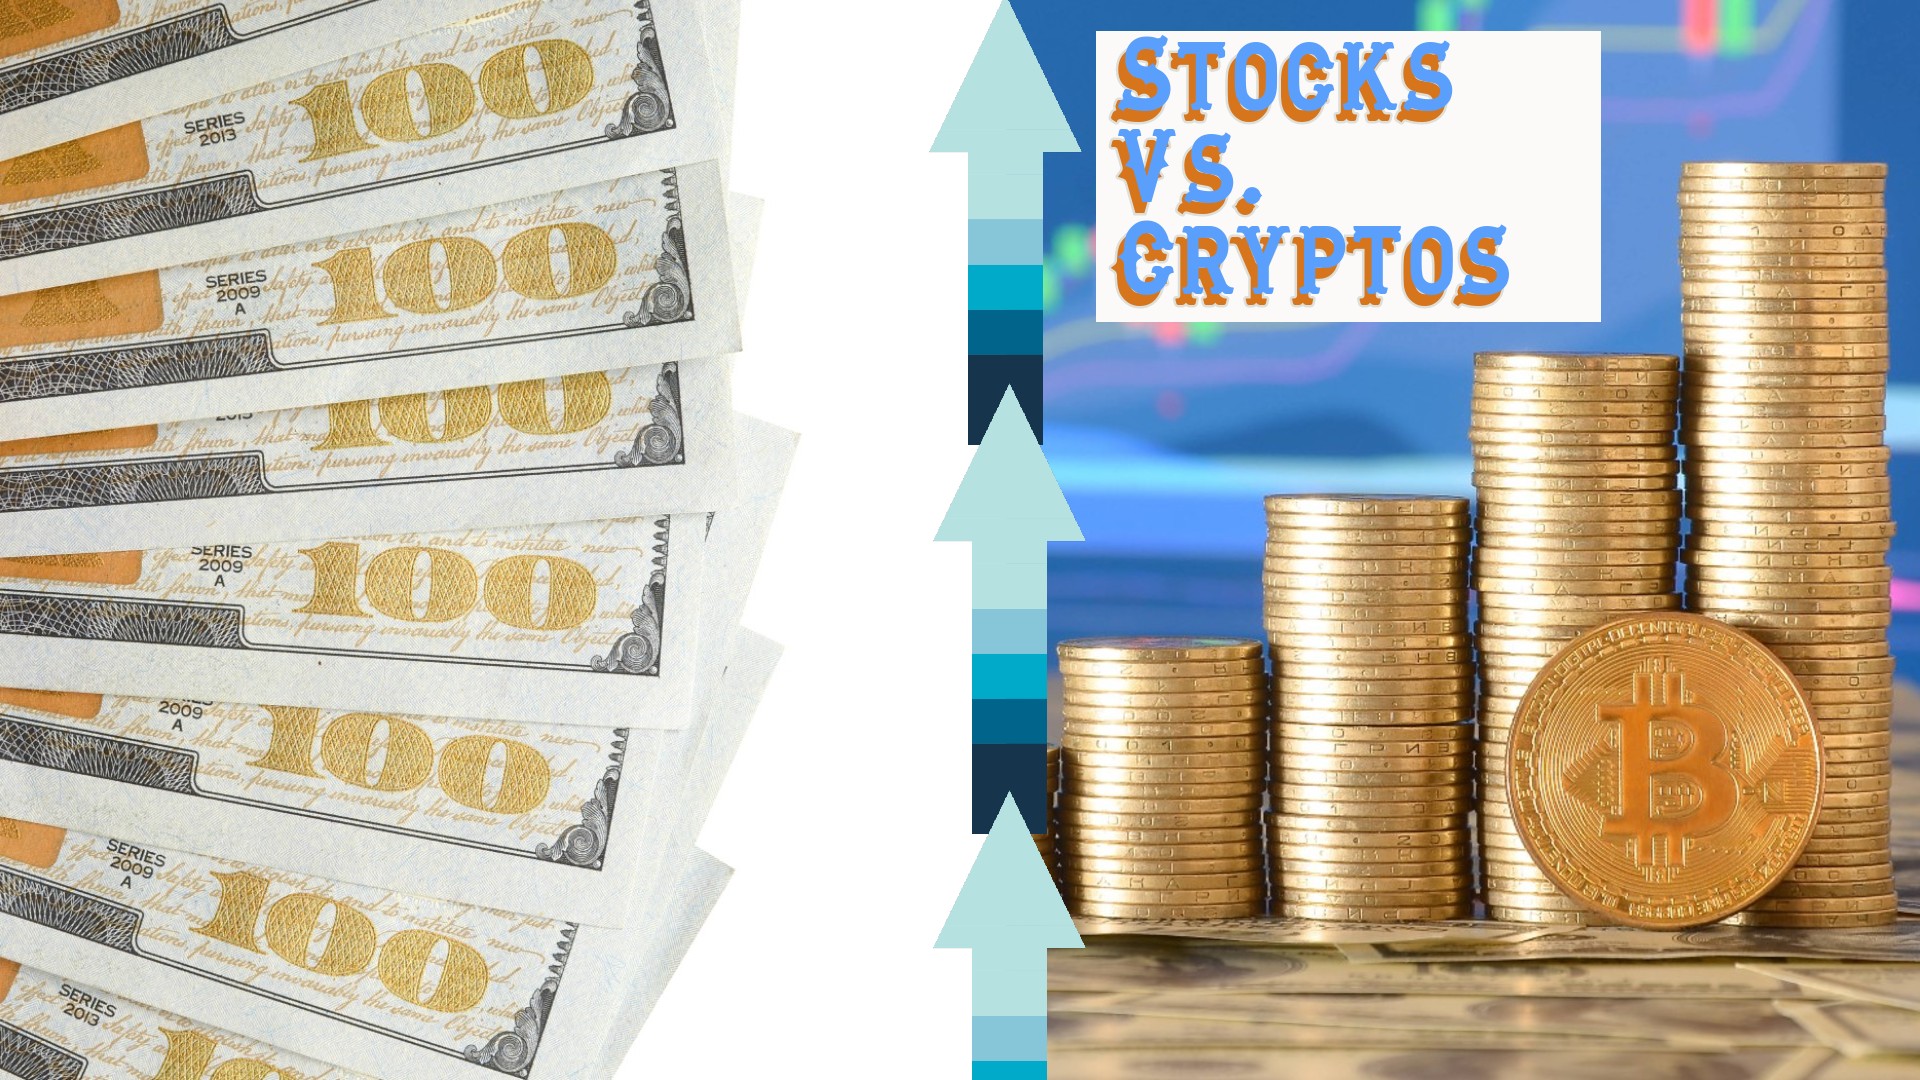 Stocks vs. Cryptos